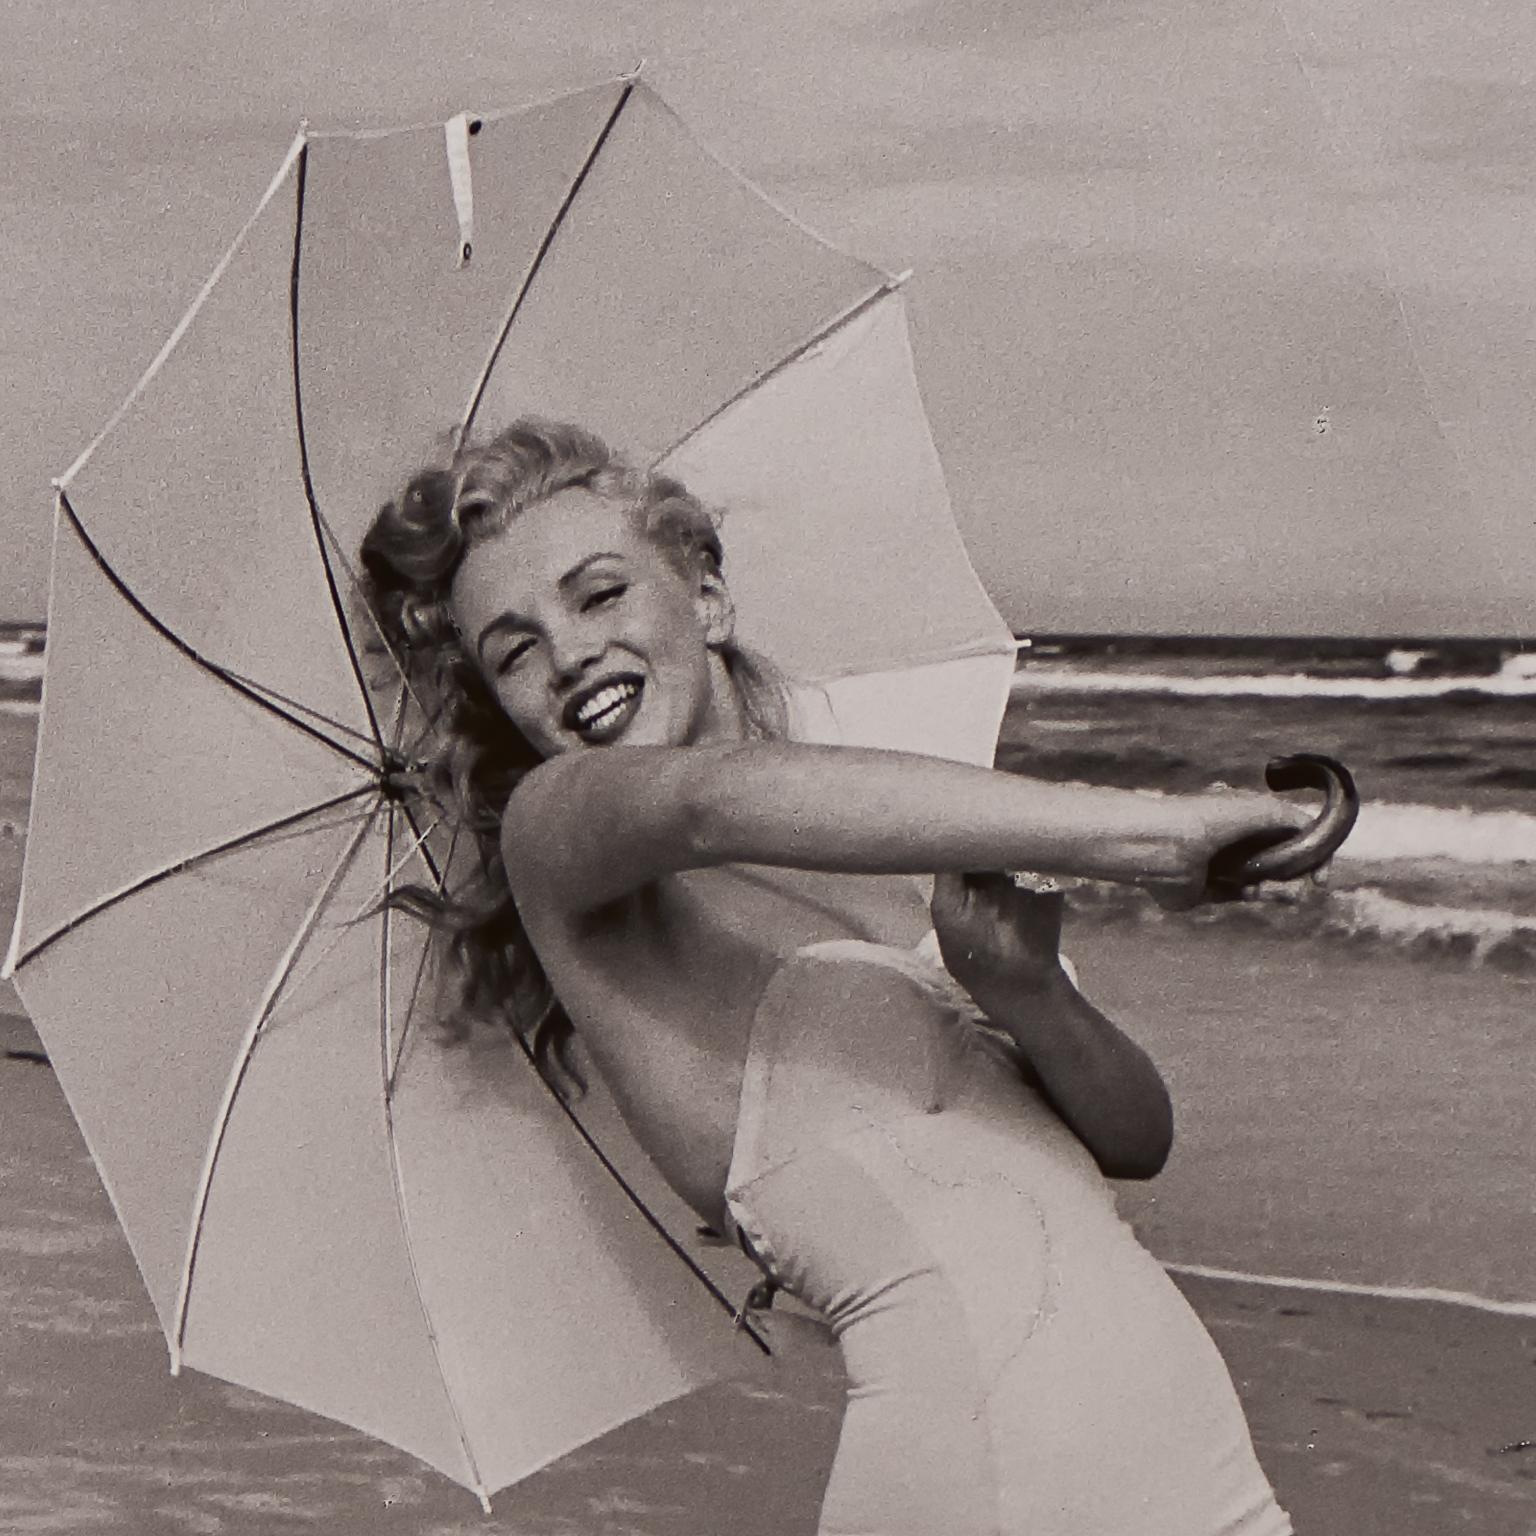 Marilyn Monroe 'Umbrella Girl on Beach' by André de Dienes - Black and White - Print by Andre de Dienes